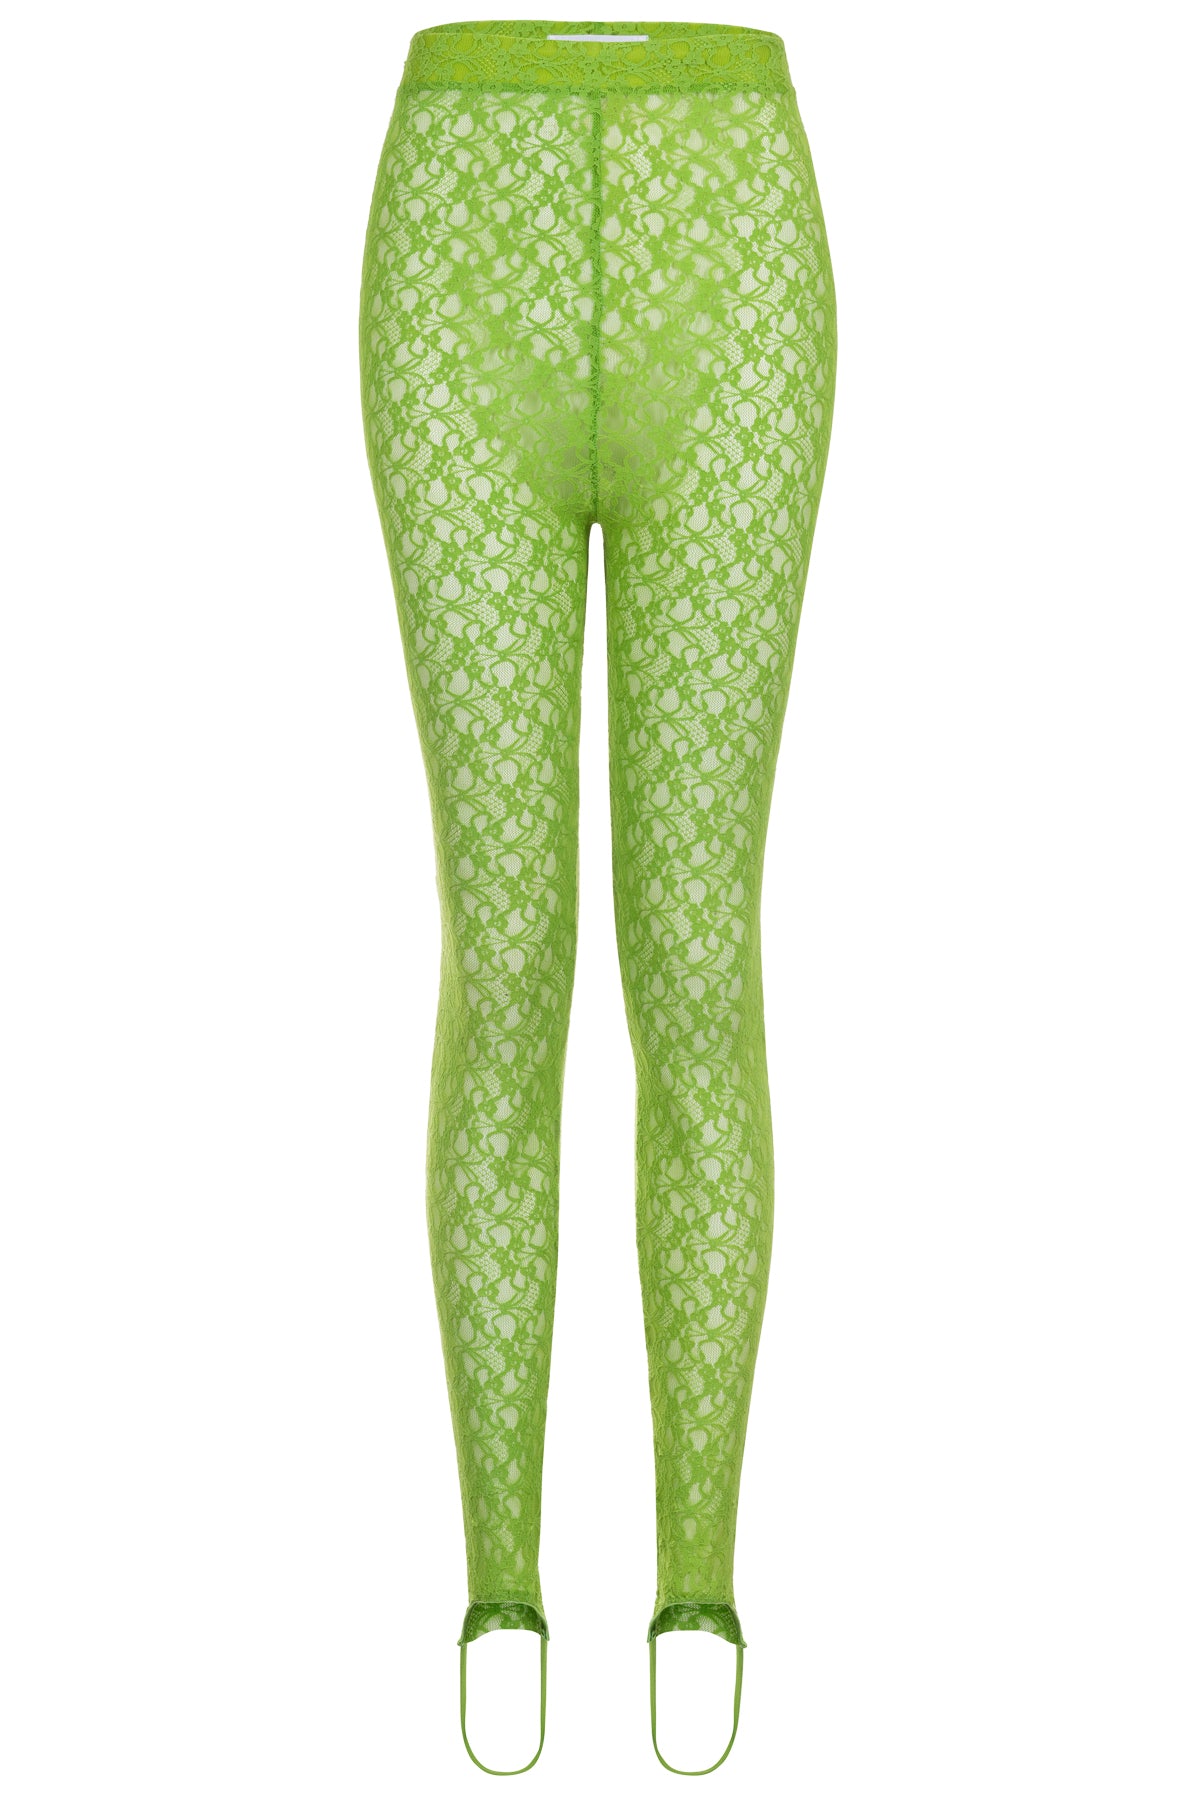 Sadie Lime Green Lace Stirrup Leggings- Made to Order – Natalie & Alanna